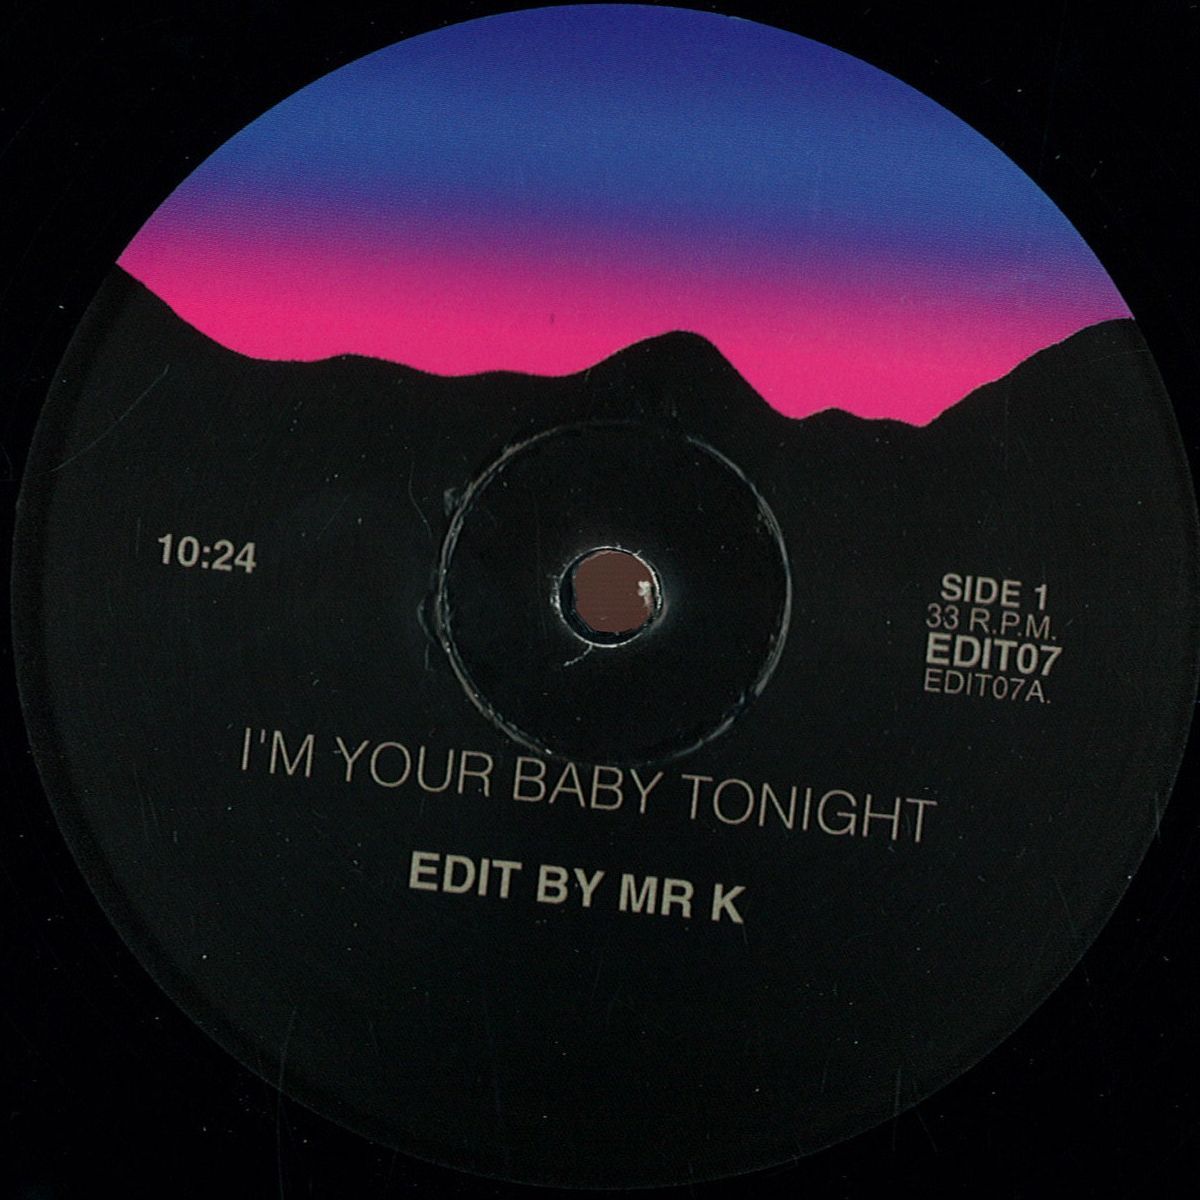 00-Whitney Houston & Chocolate-I'm Your Baby Tonight - It's That East Street Beat-2015-